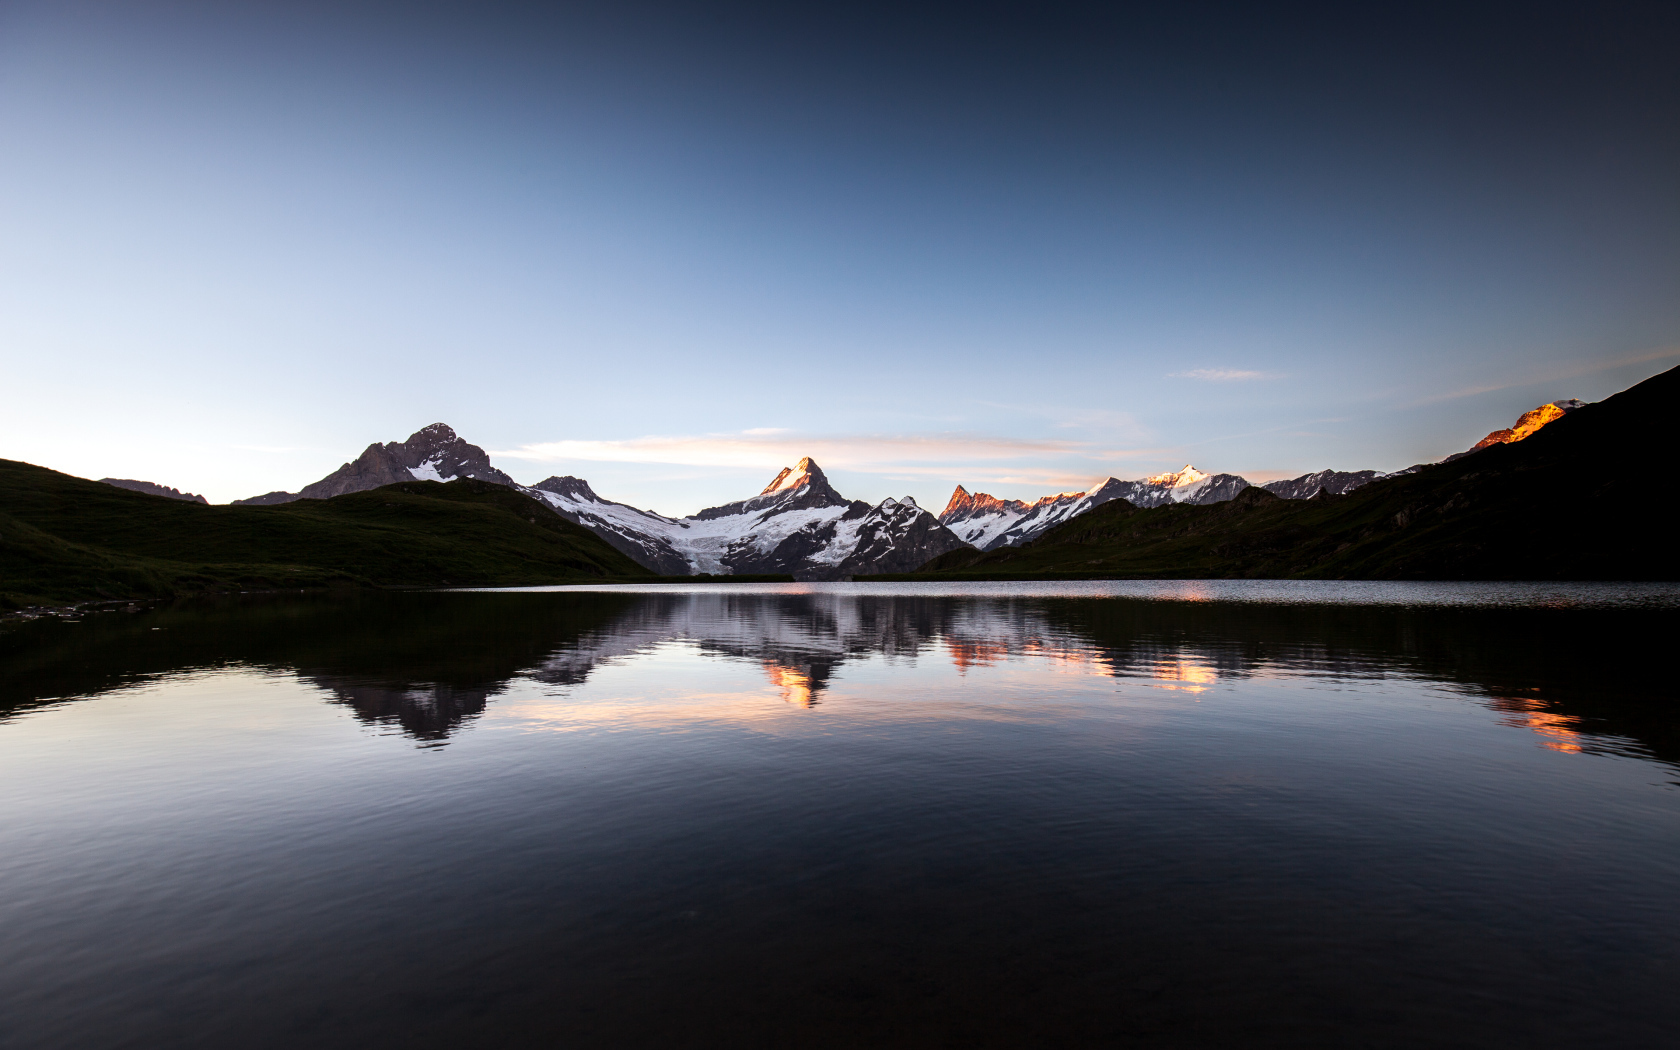 Calm mountain lake near the snowy mountains